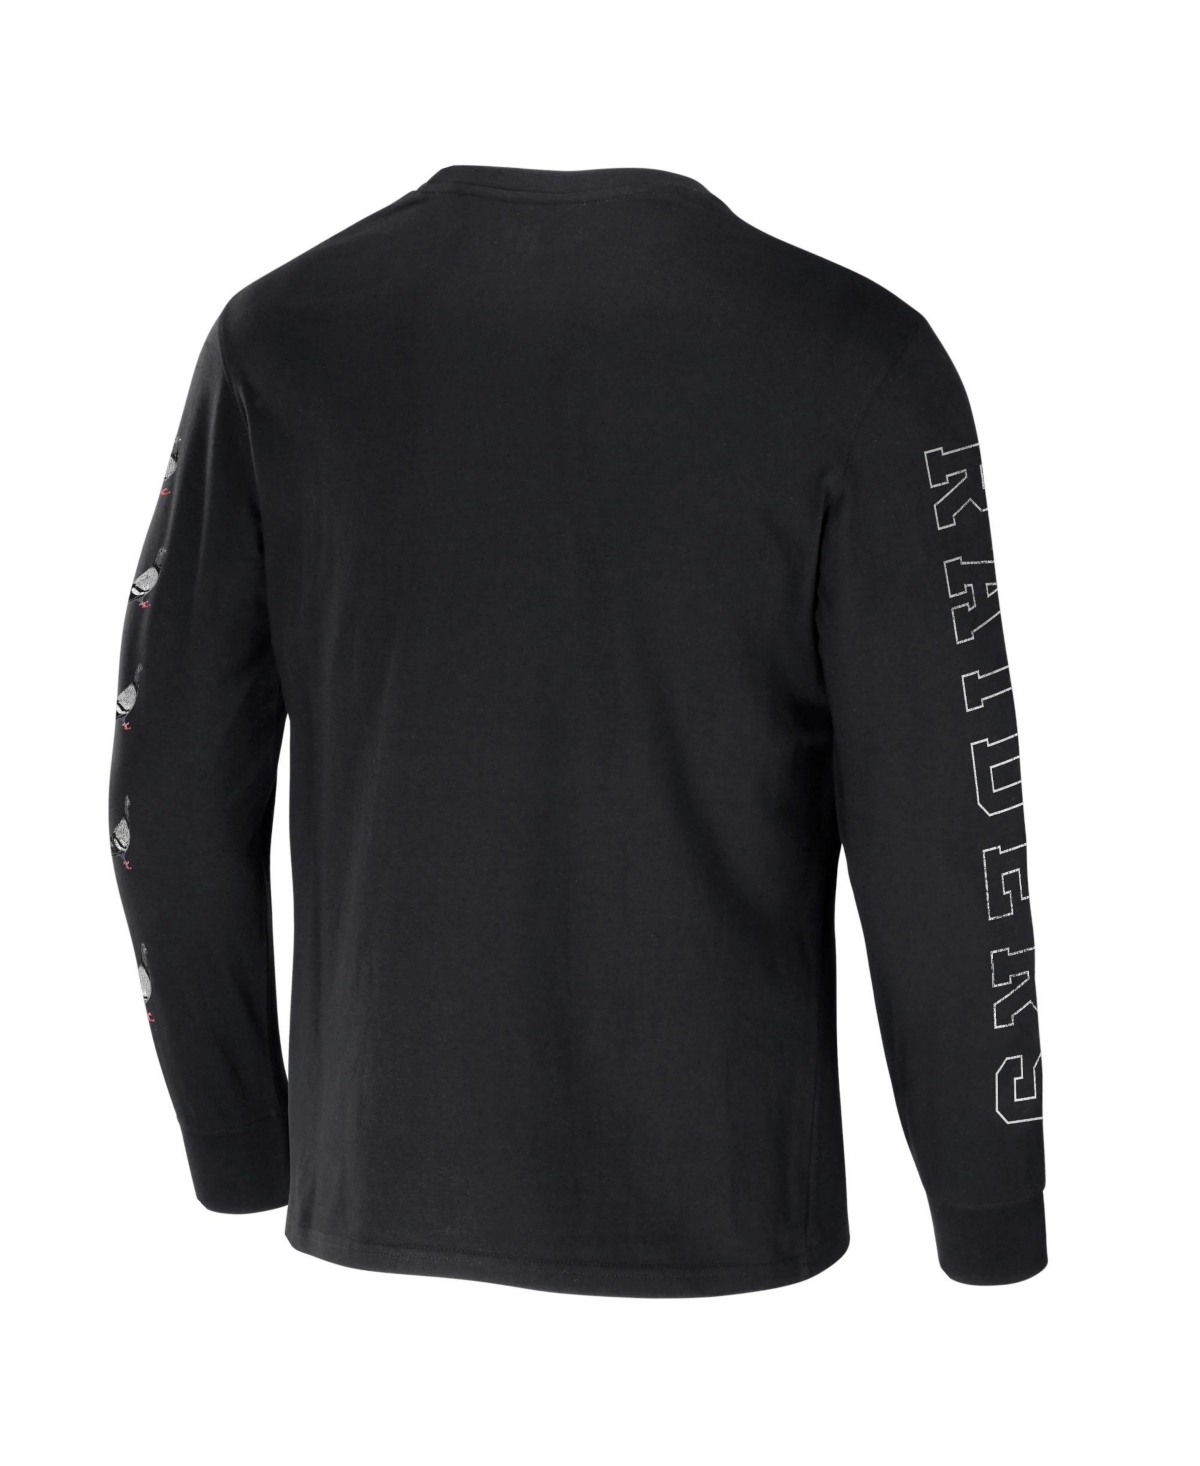 Shop Nfl Properties Men's Nfl X Staple Black Las Vegas Raiders World Renowned Long Sleeve T-shirt